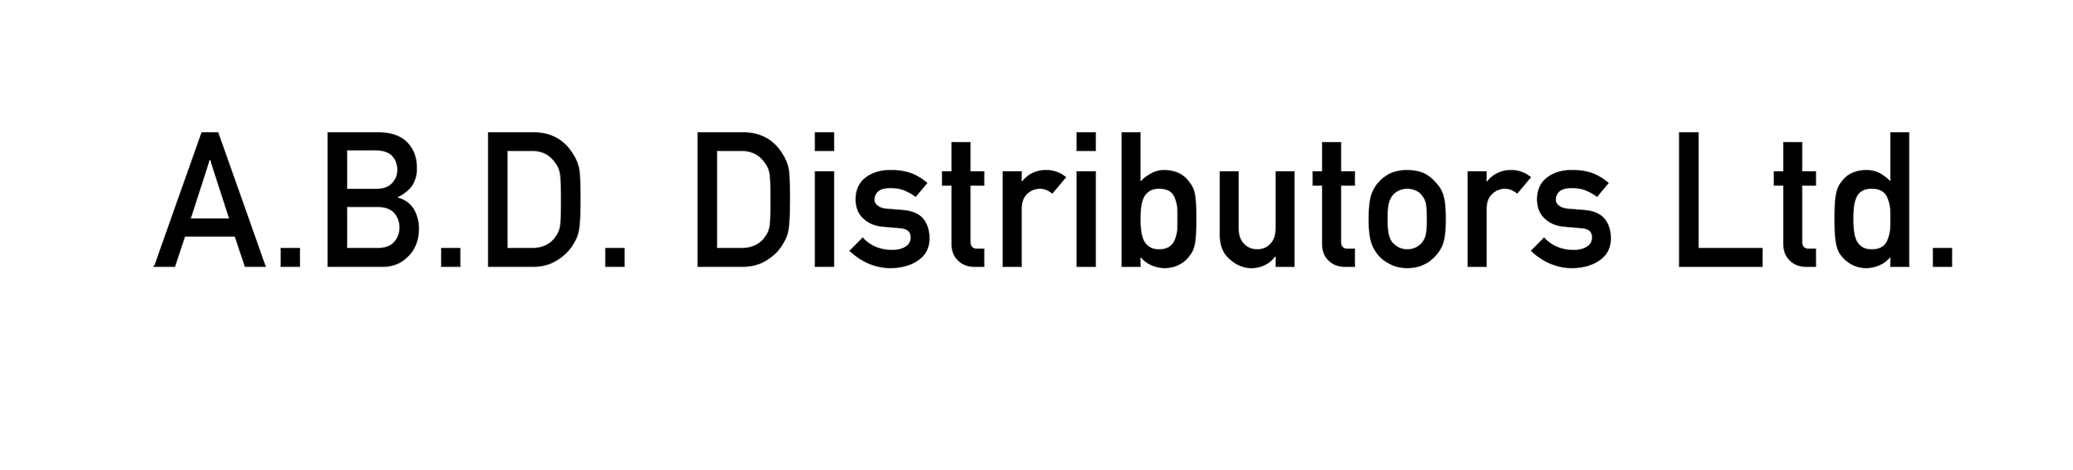 A.B.D. Distributors Ltd